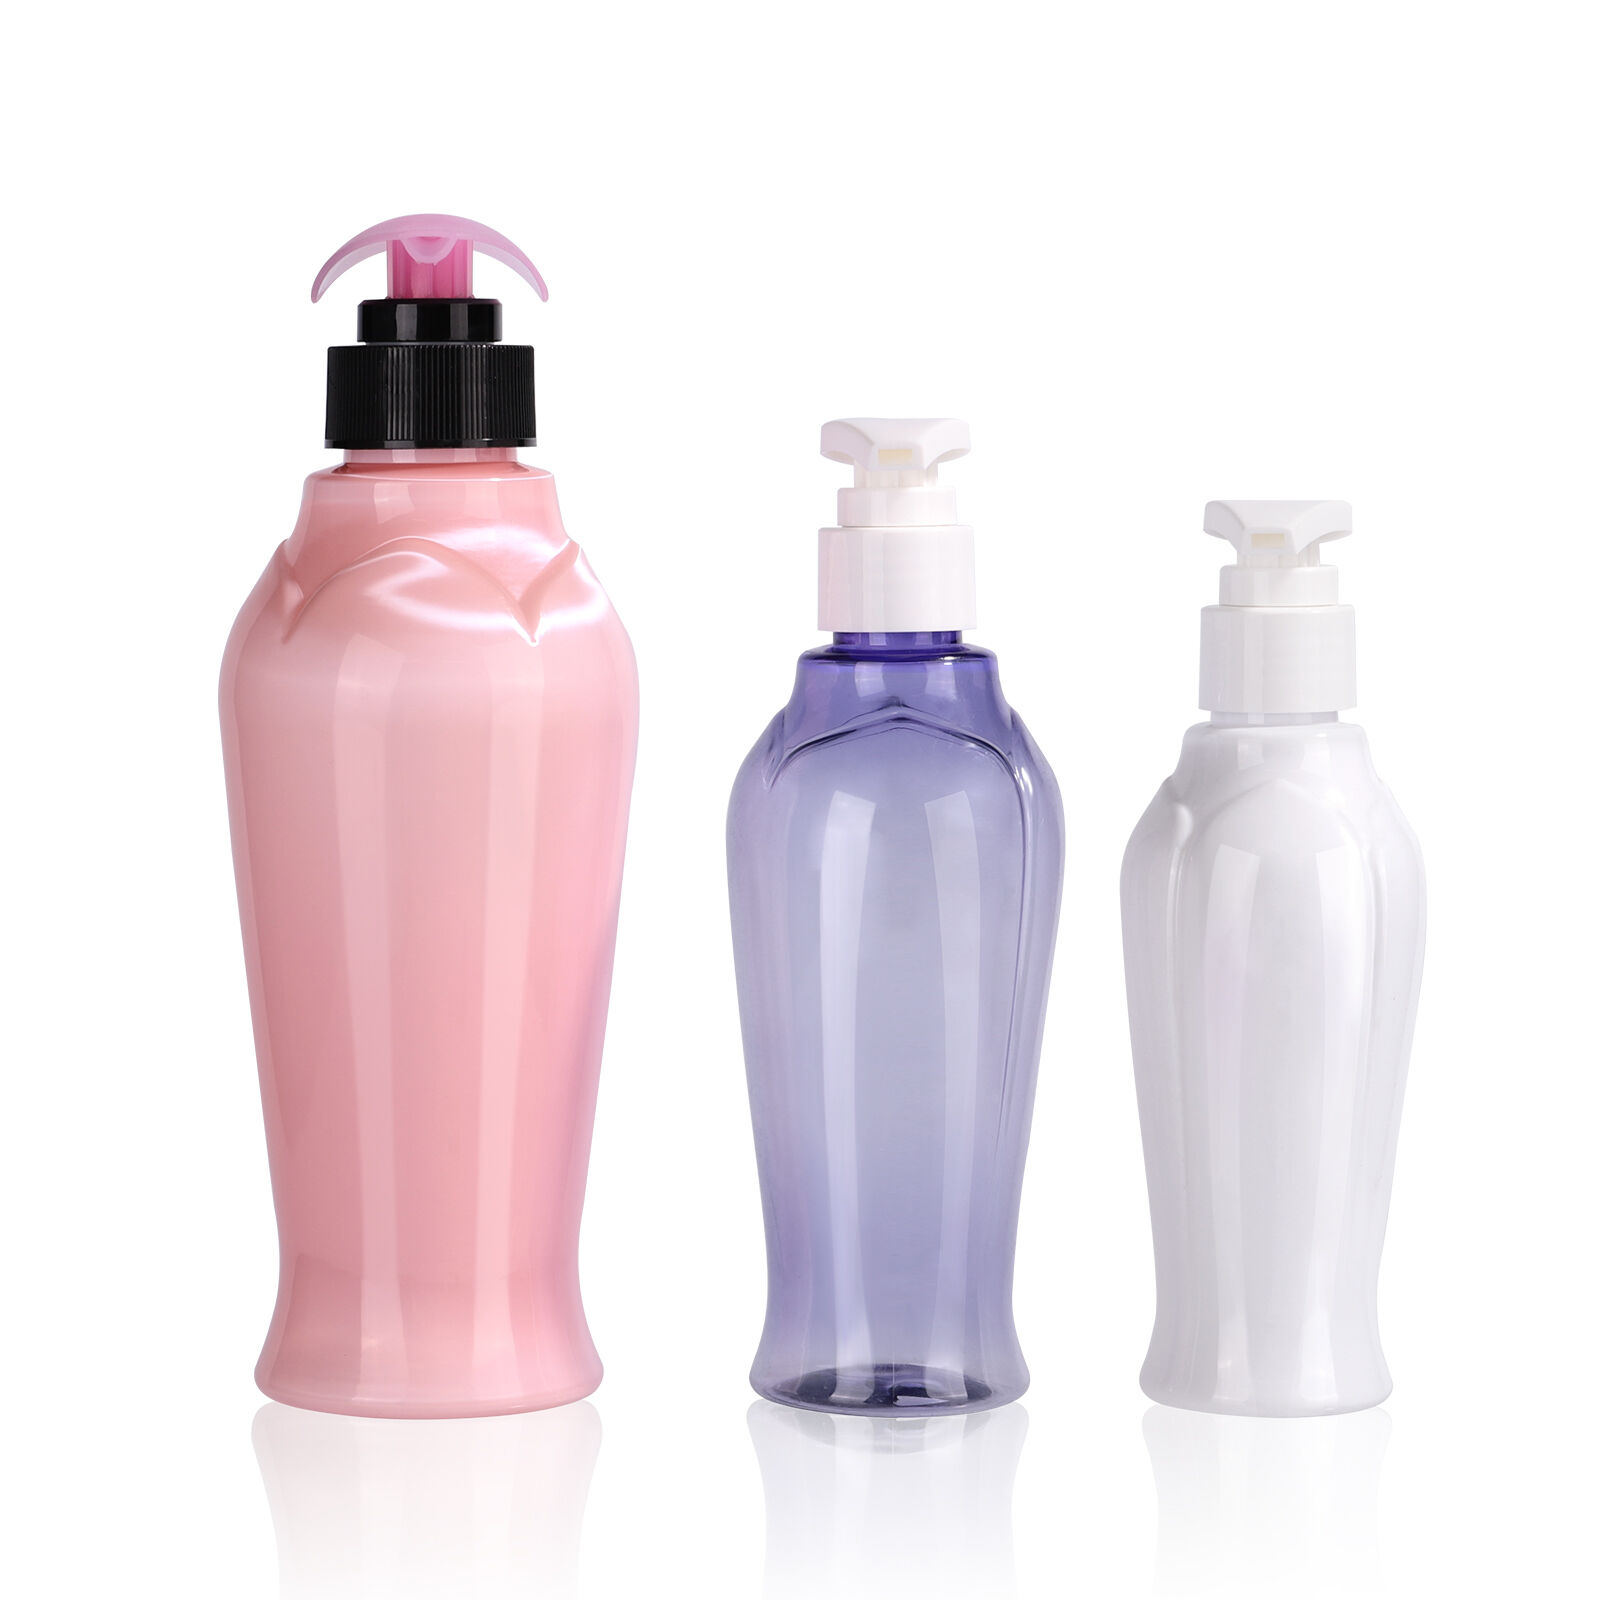 180ml/300ml/400ml empty custom made PET plastic bottle /essential oil//shampoo/body lotion /hand sanitizer/bottle